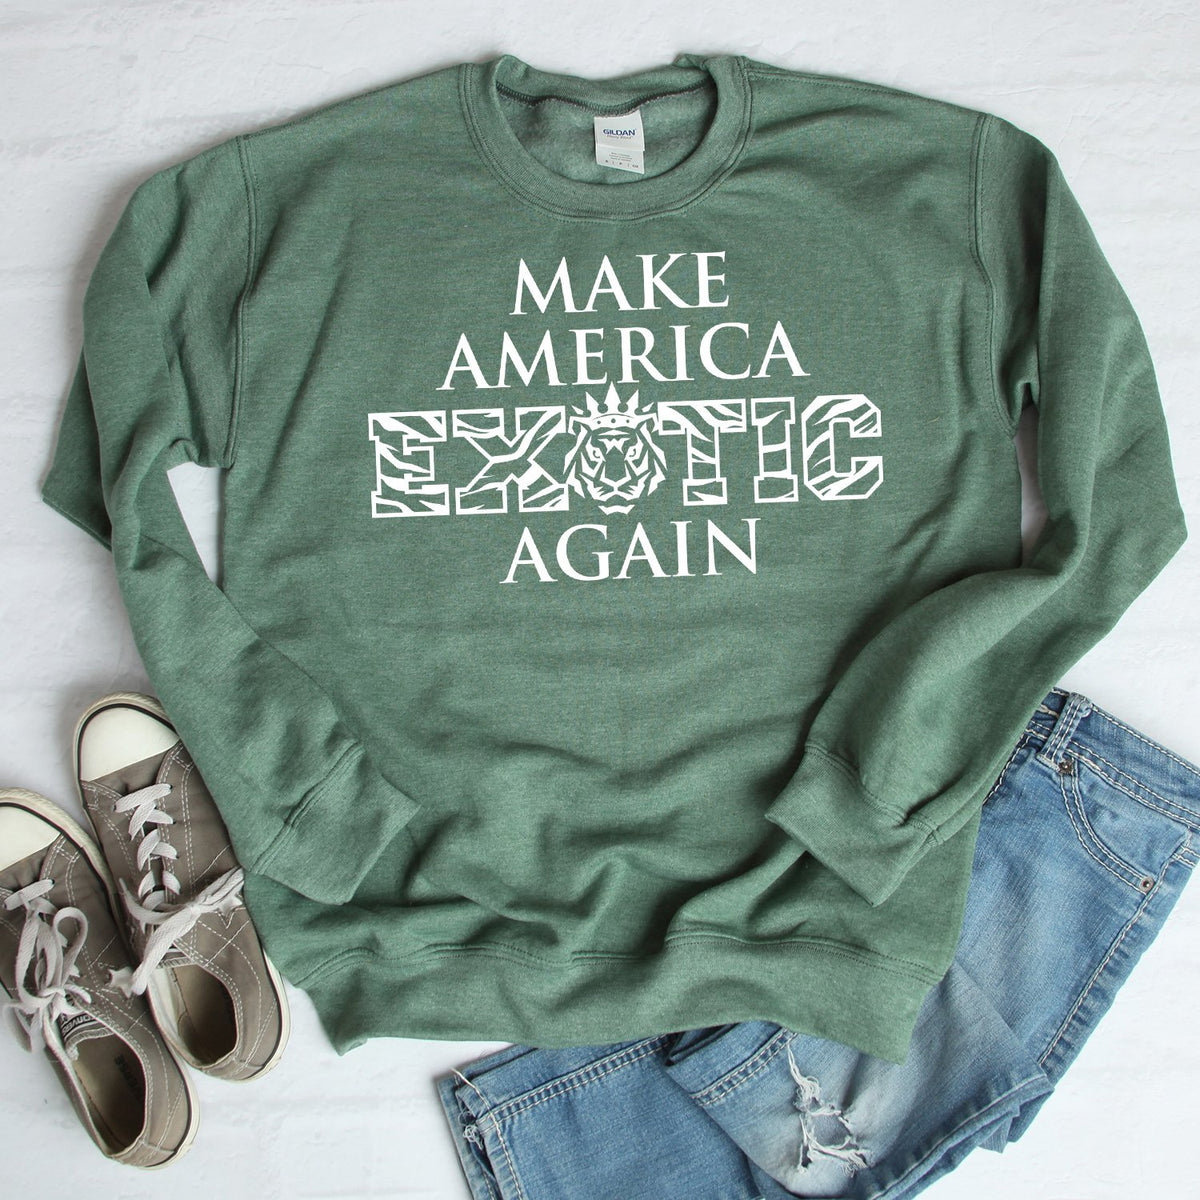 Make America Exotic Again - Long Sleeve Heavy Crewneck Sweatshirt